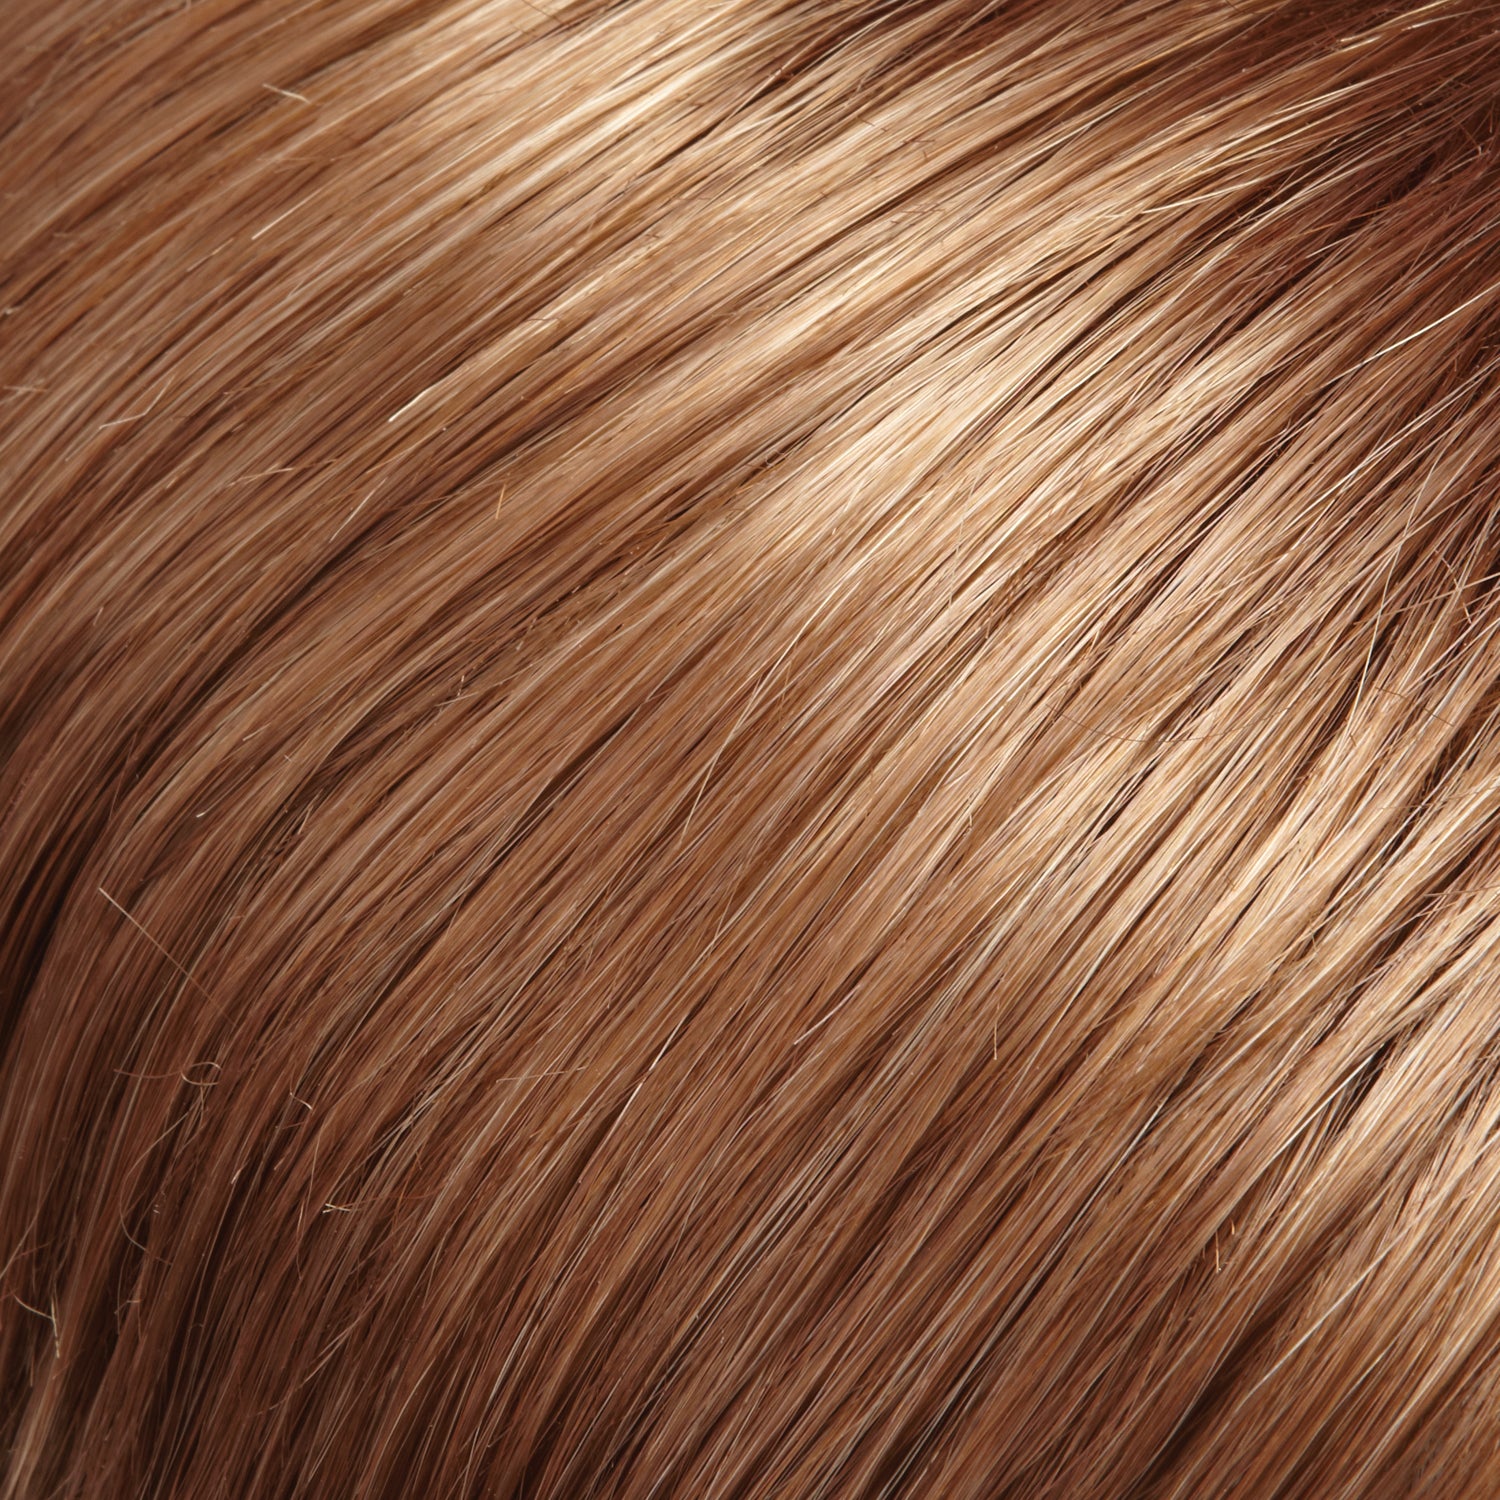 Carrie Hand Tied wig - Jon Renau SmarLace Human Hair Collection